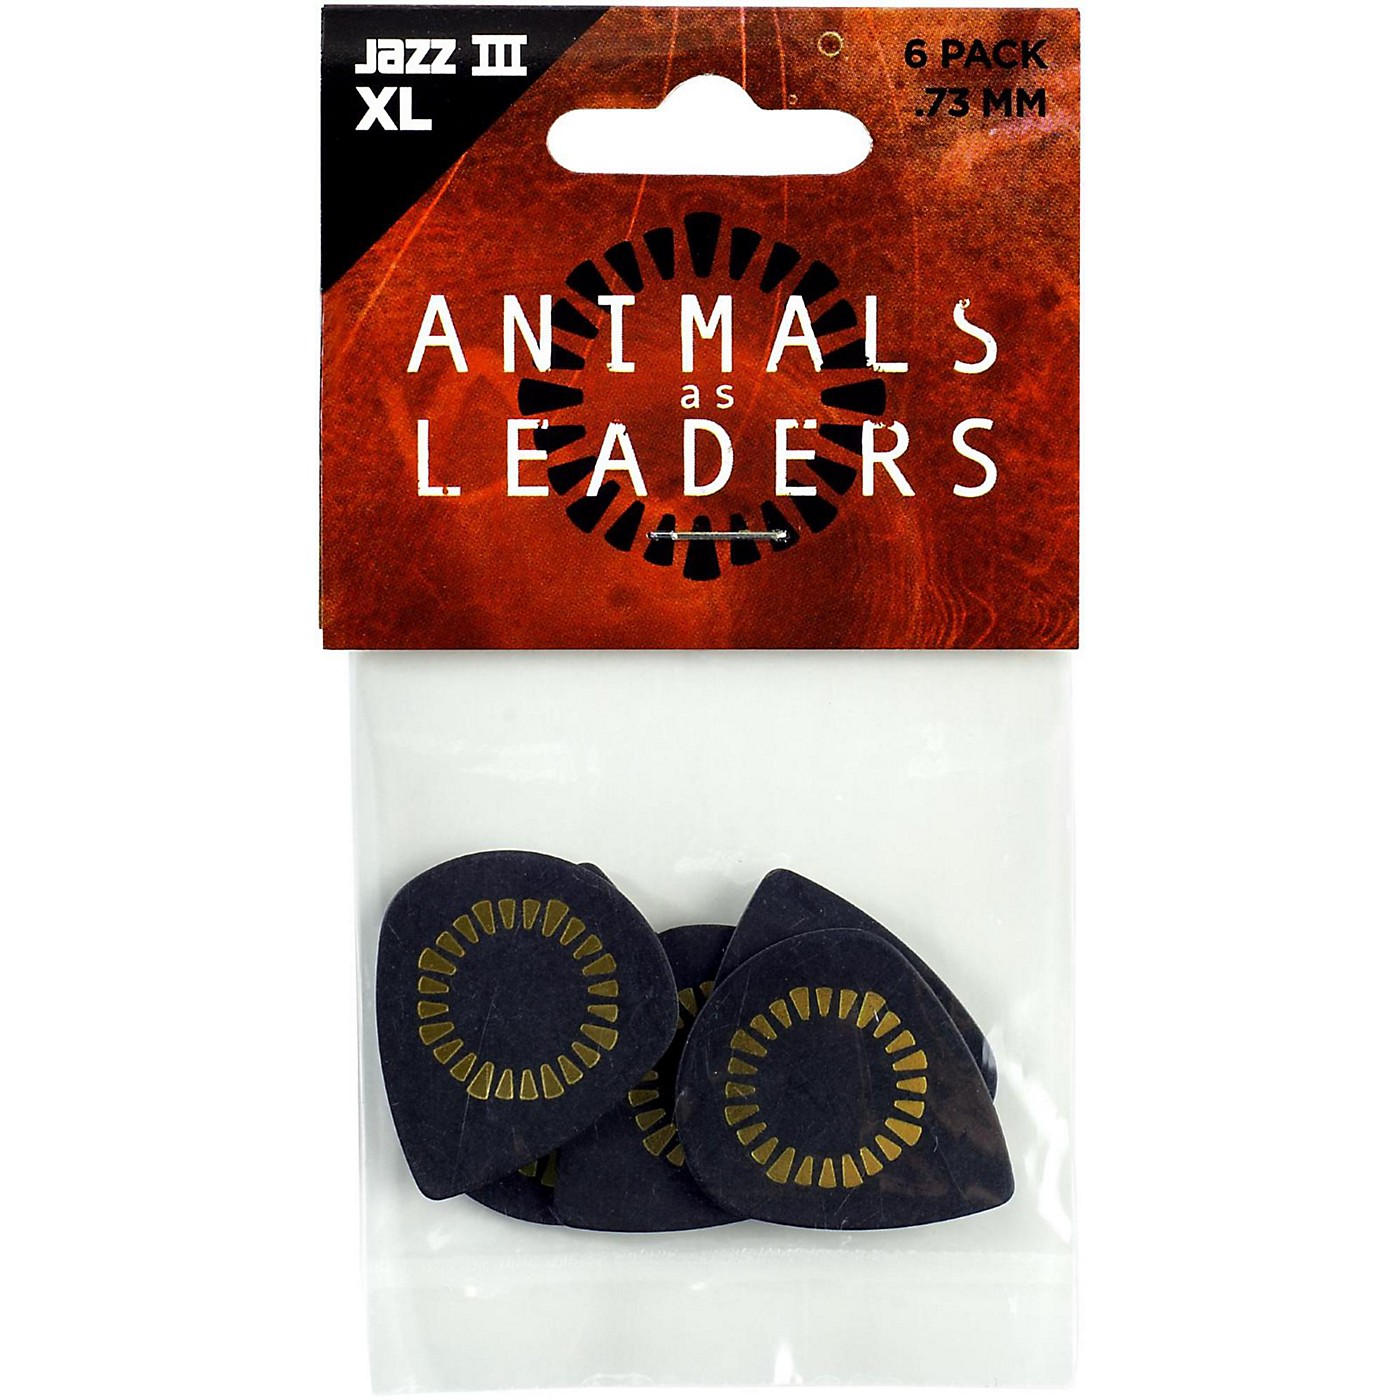 Dunlop Animals As Leaders Tortex Jazz III XL, Black, Guitar Picks thumbnail